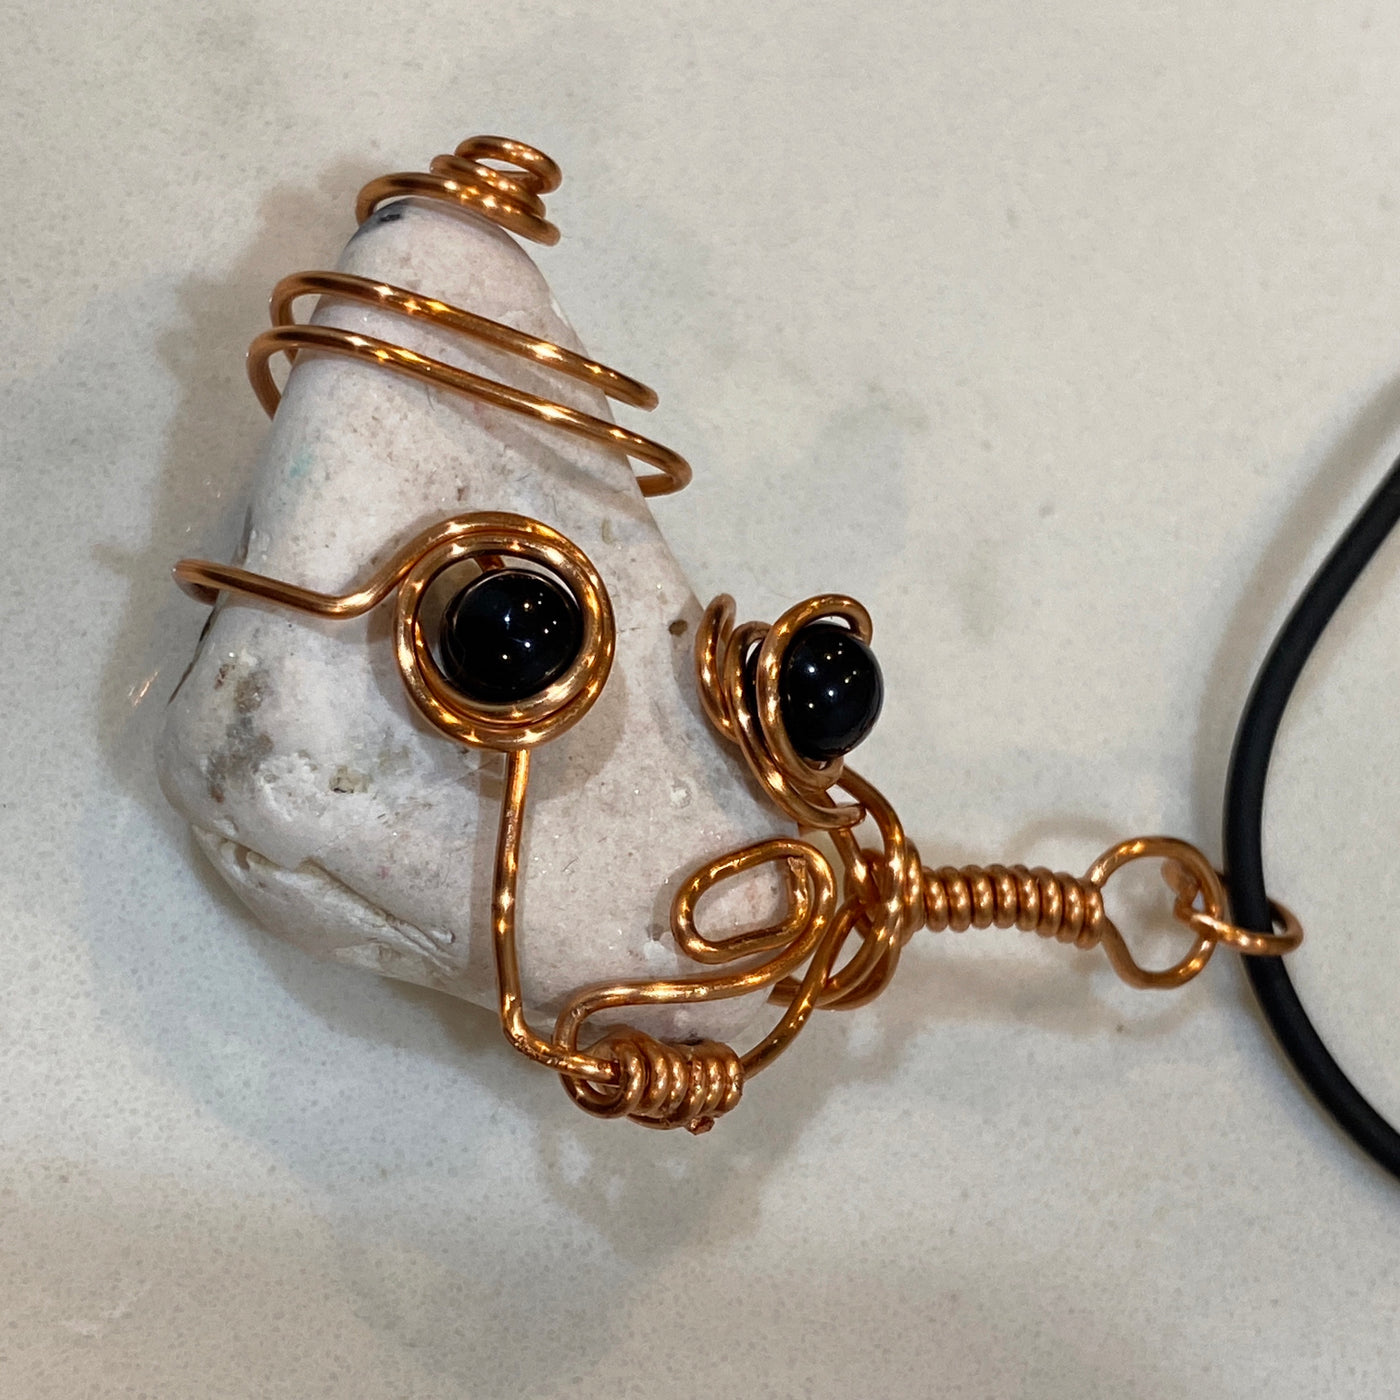 White natural stone, onyx and wire. Medium size pendant. Milky stone.